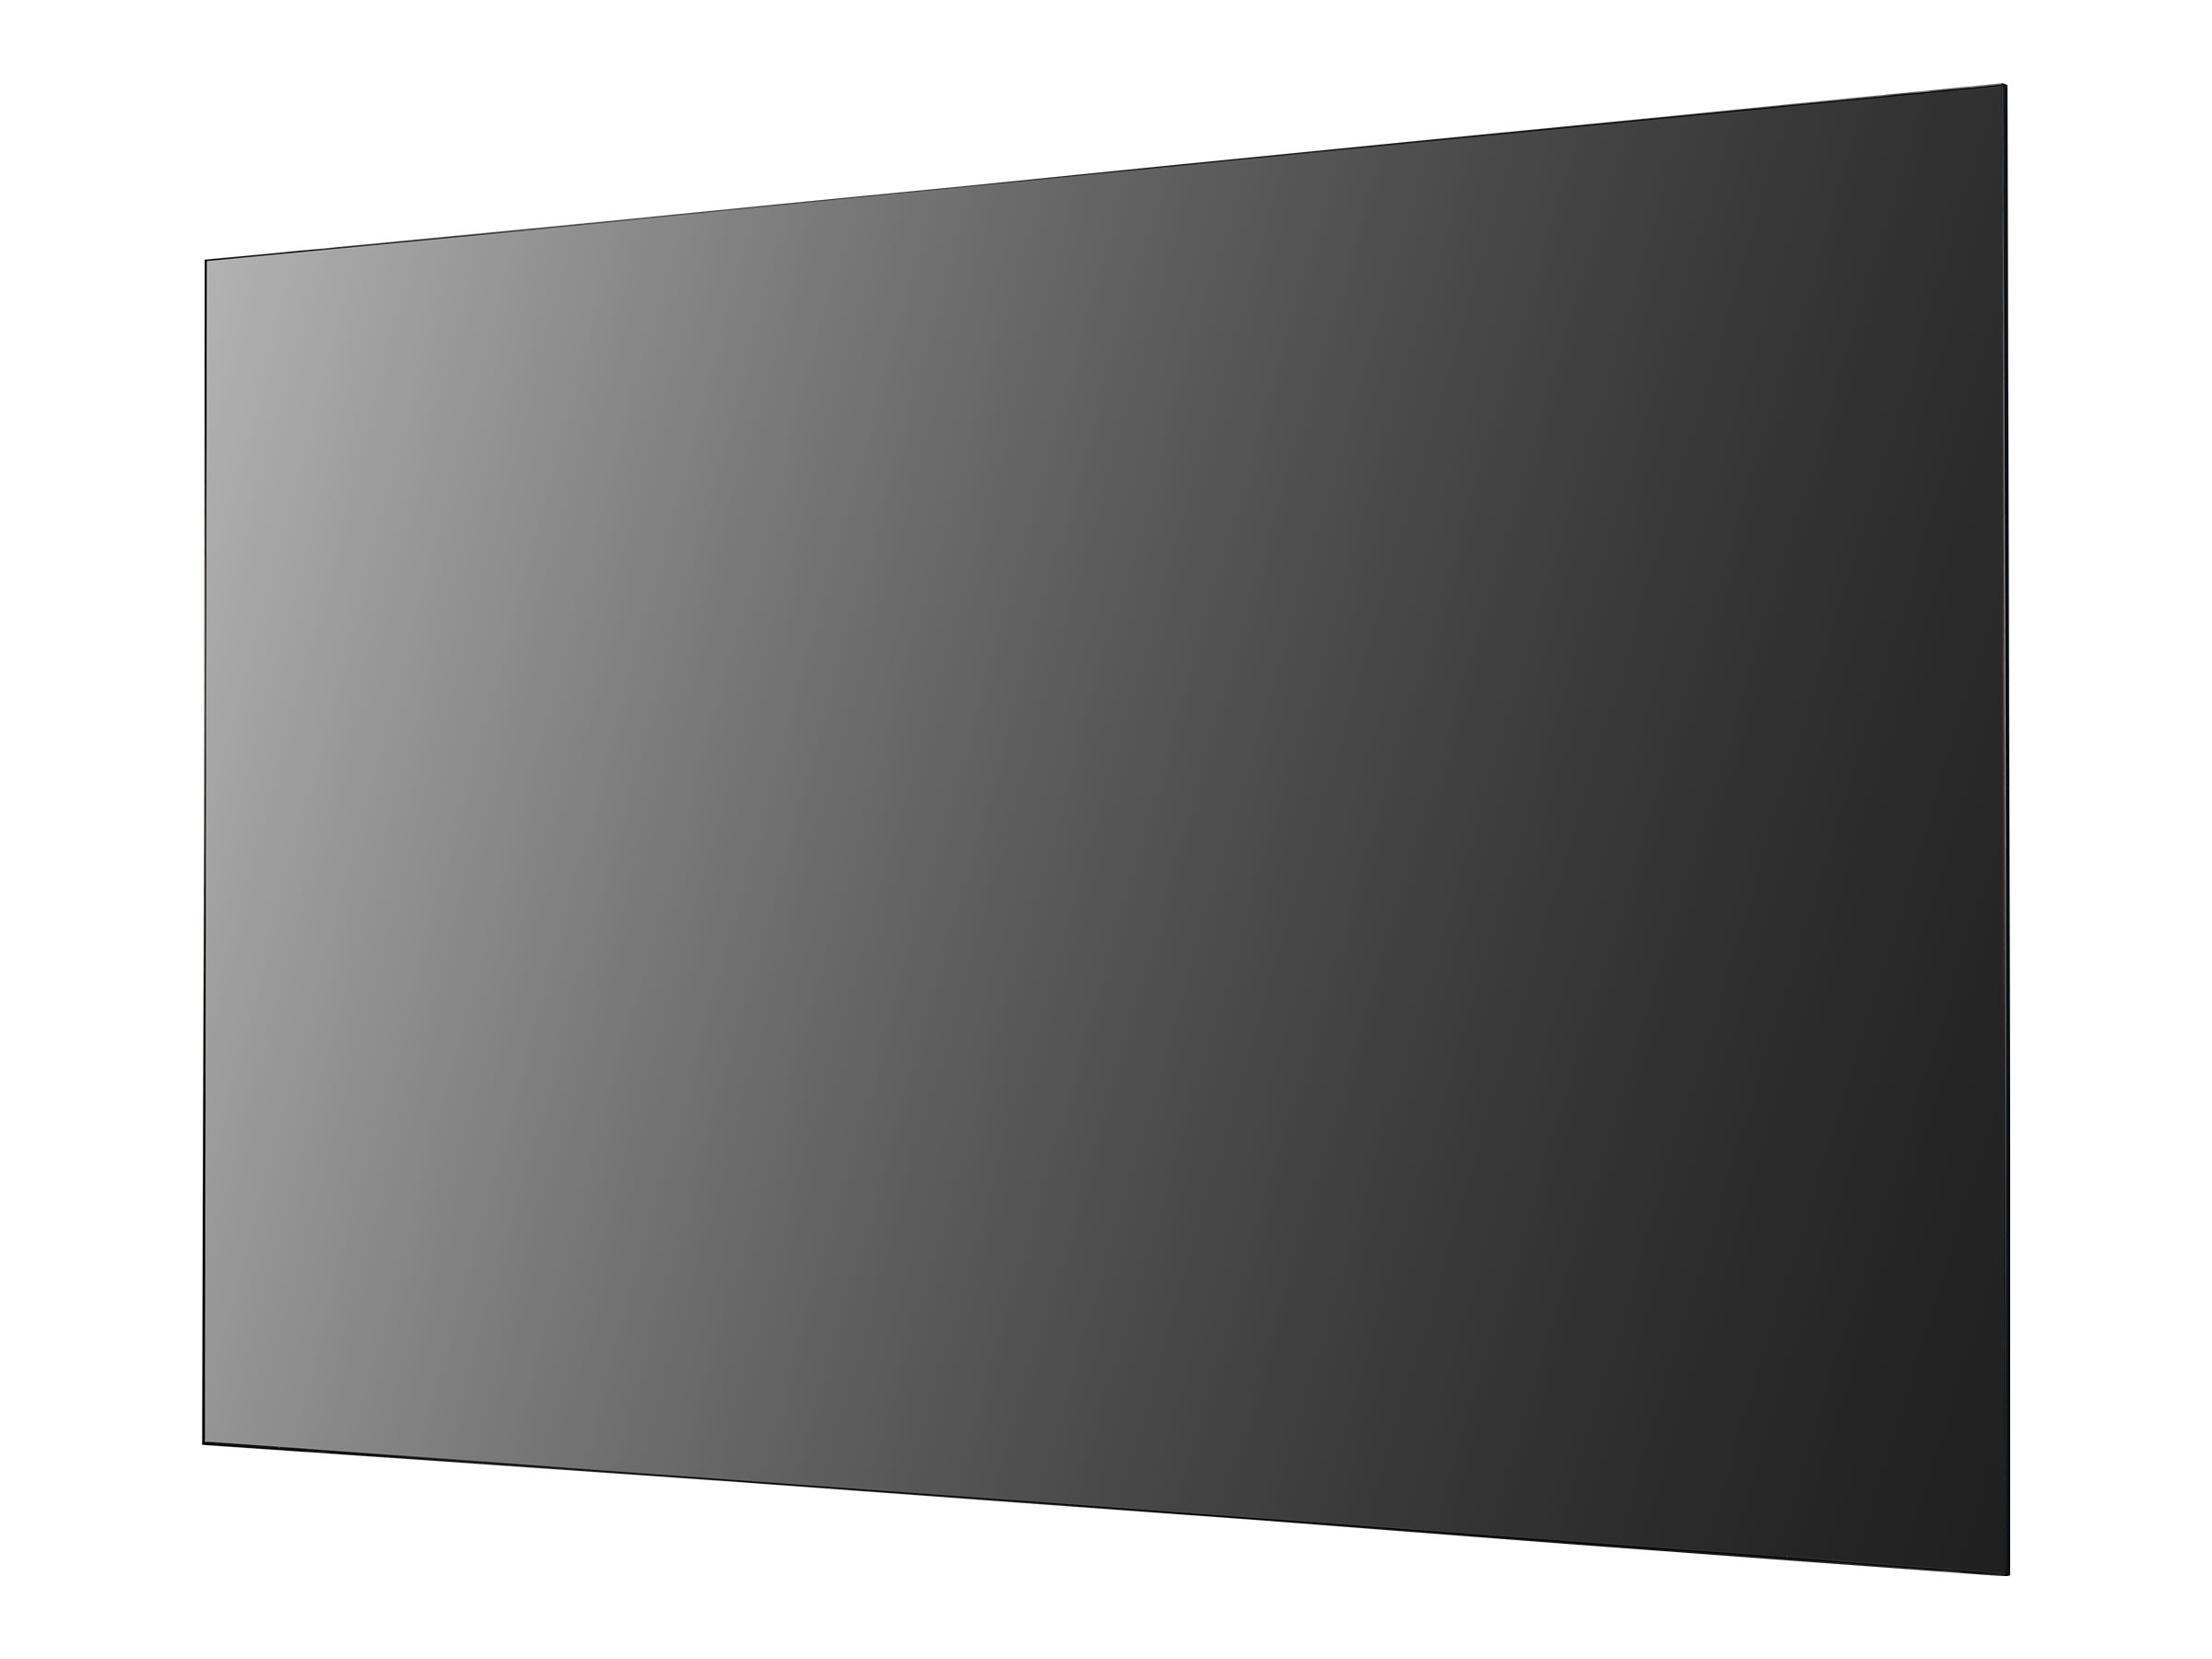 LG Wallpaper 55EJ5E - 55" Diagonal Class EJ5E Series OLED display - digital signage - 1080p (Full HD) 1920 x 1080 - black - image 2 of 7